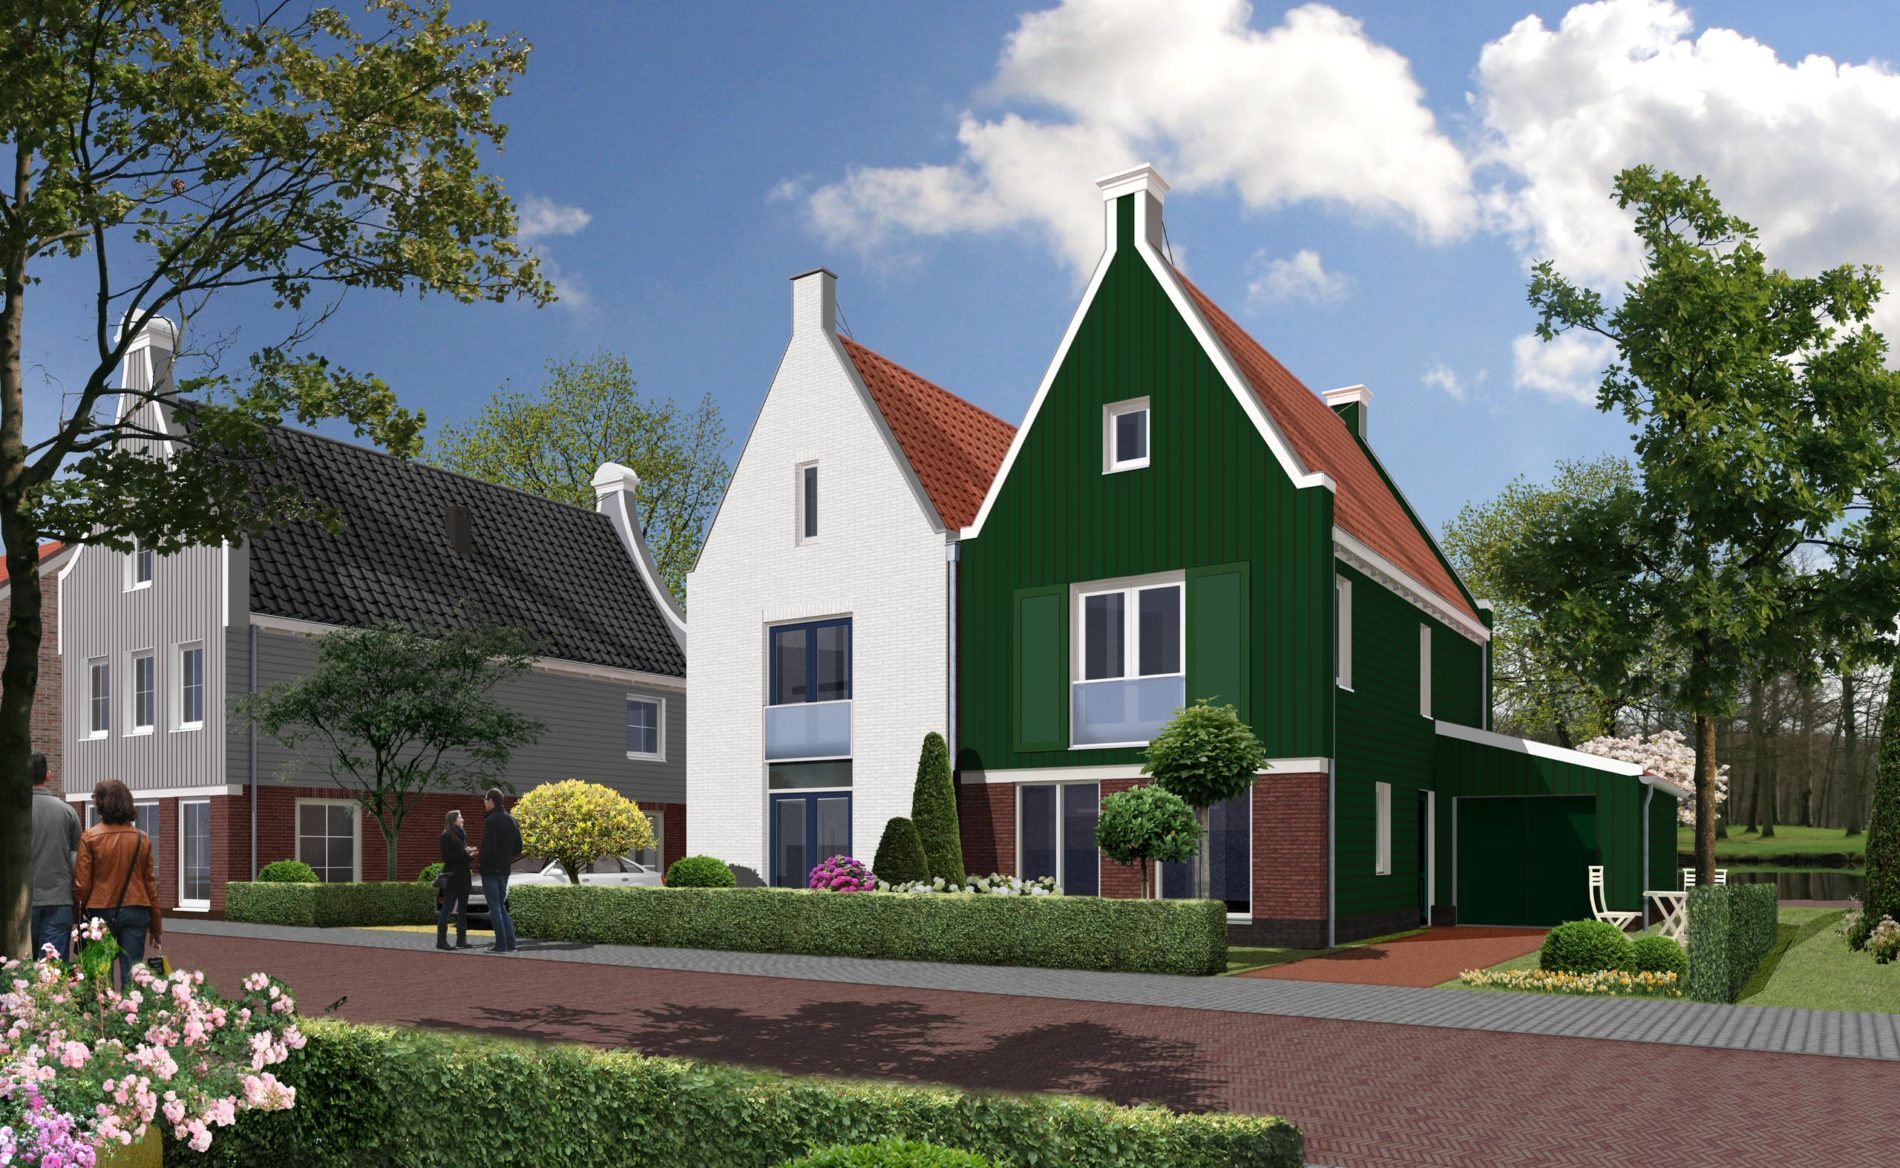 woningbouw woningen De Pauw de Rijp dorps bouwen architect Ton van 't Hoff architectuur